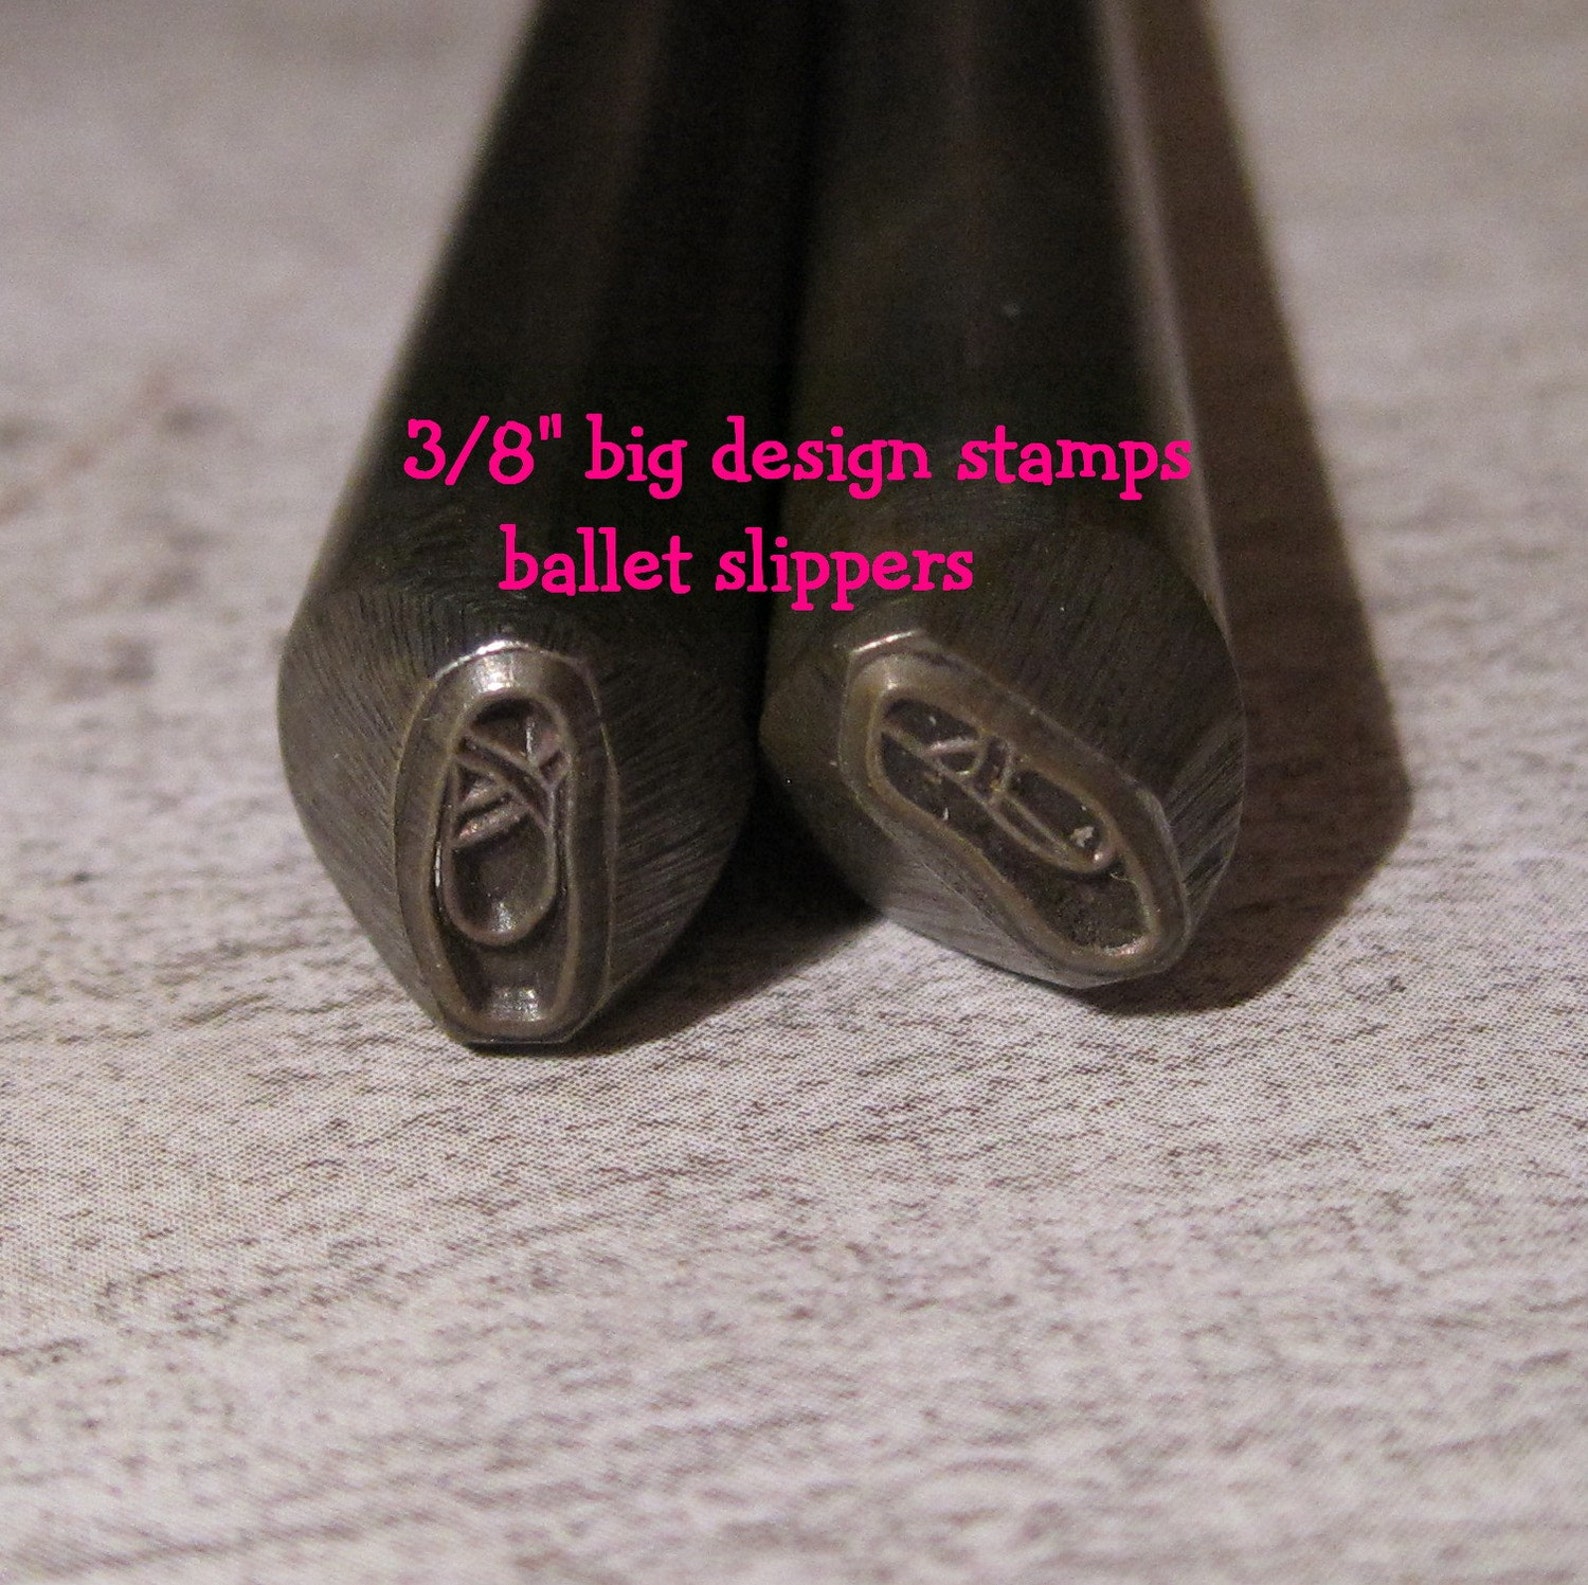 big design stamp set - ballet slippers by wonderstruck studios - 3/8 inch (9.5mm) - includes how to stamp metal tutorial